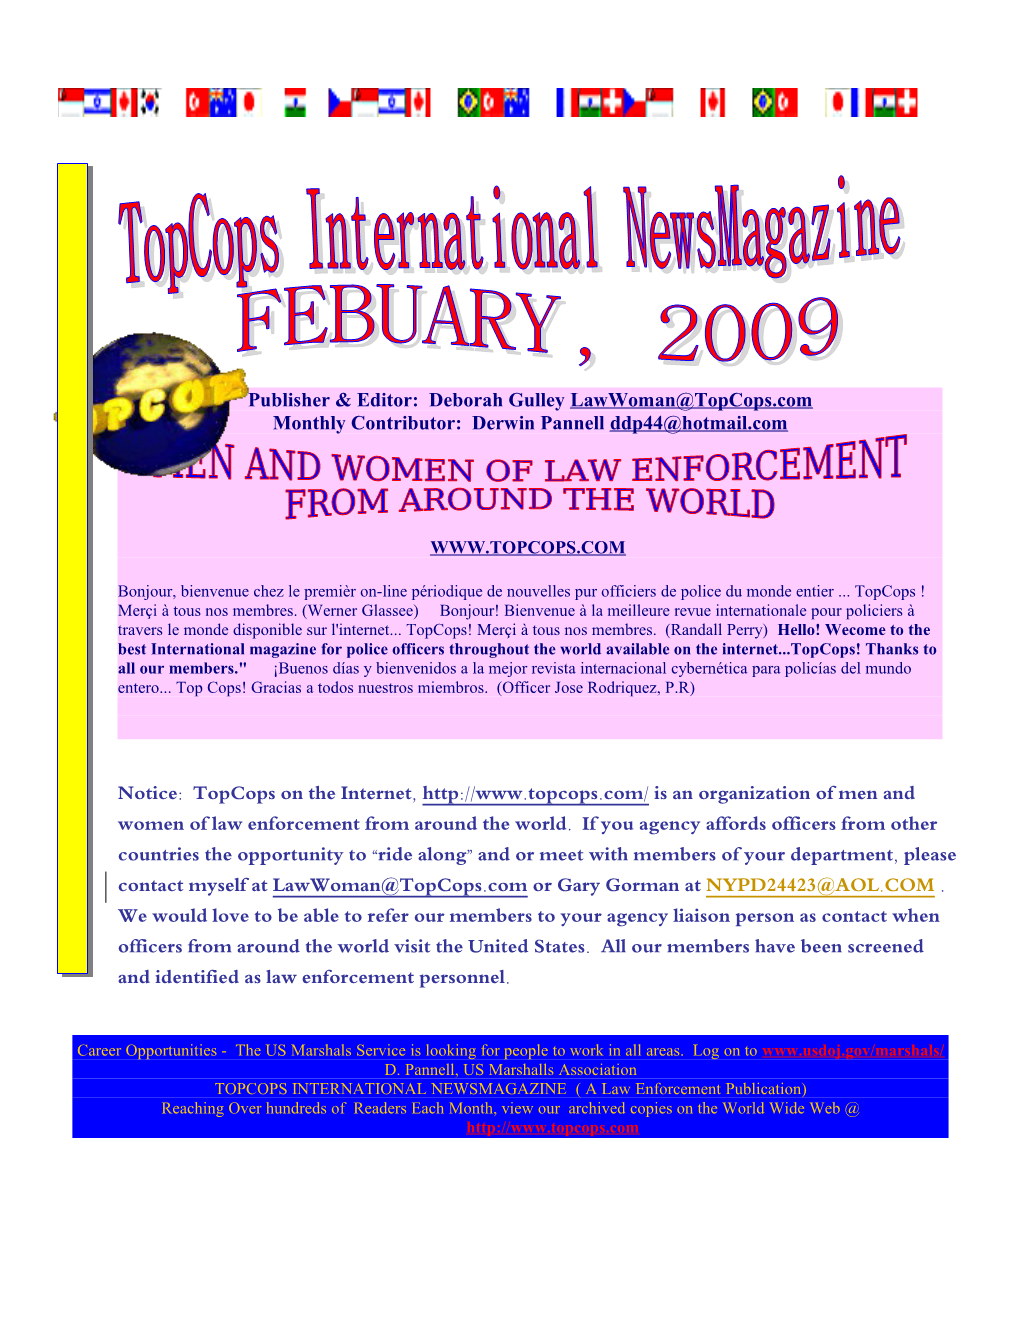 TOPCOPS INTERNATIONAL NEWSMAGAZINE ( a Law Enforcement Publication)